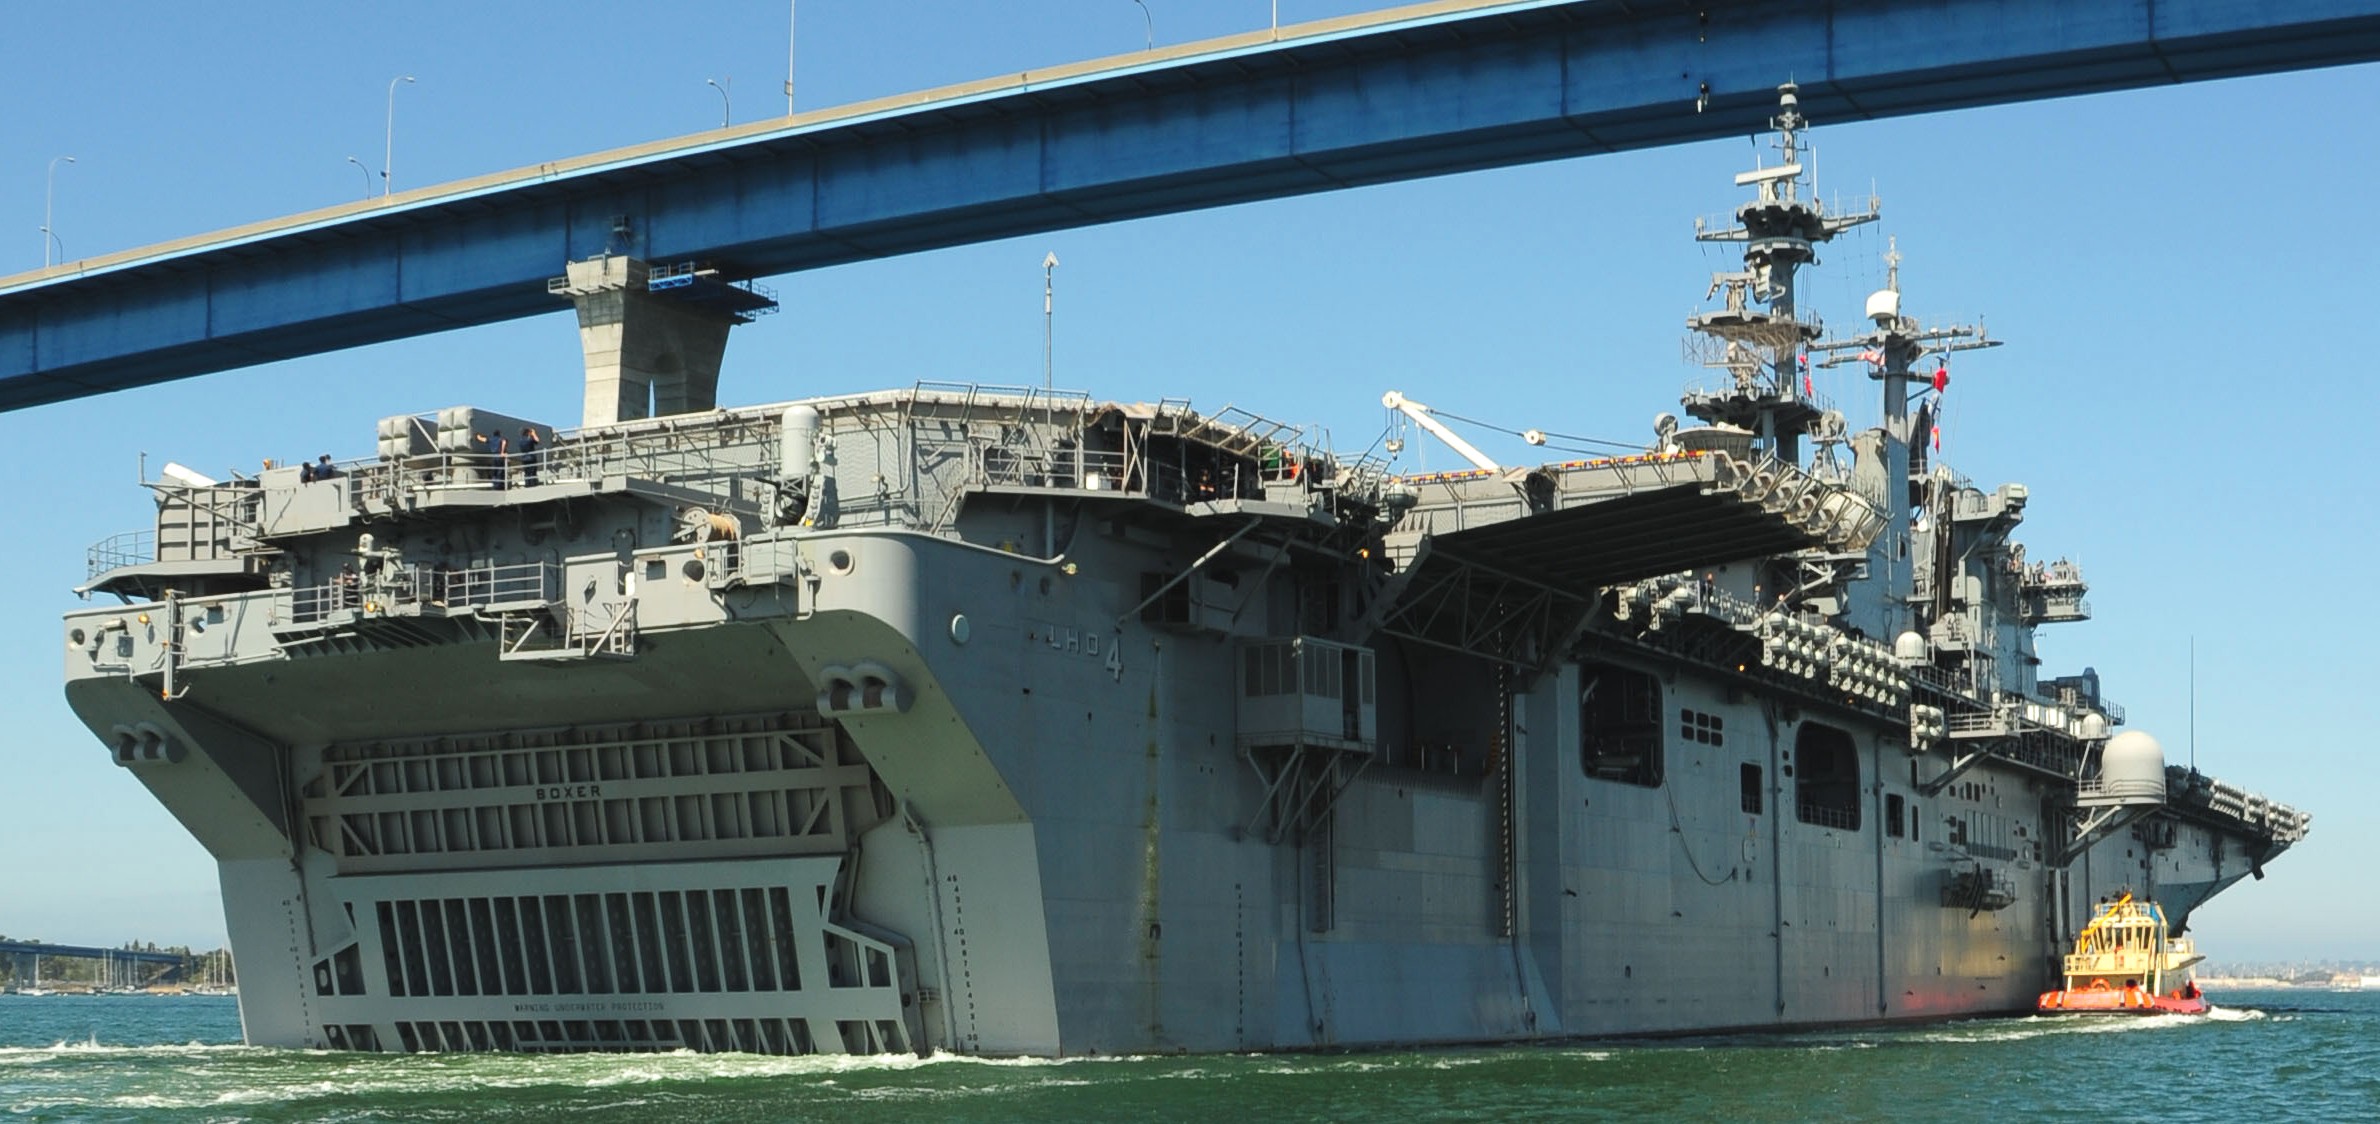 lhd-4 uss boxer wasp class amphibious assault ship dock landing us navy naval base san diego california 70